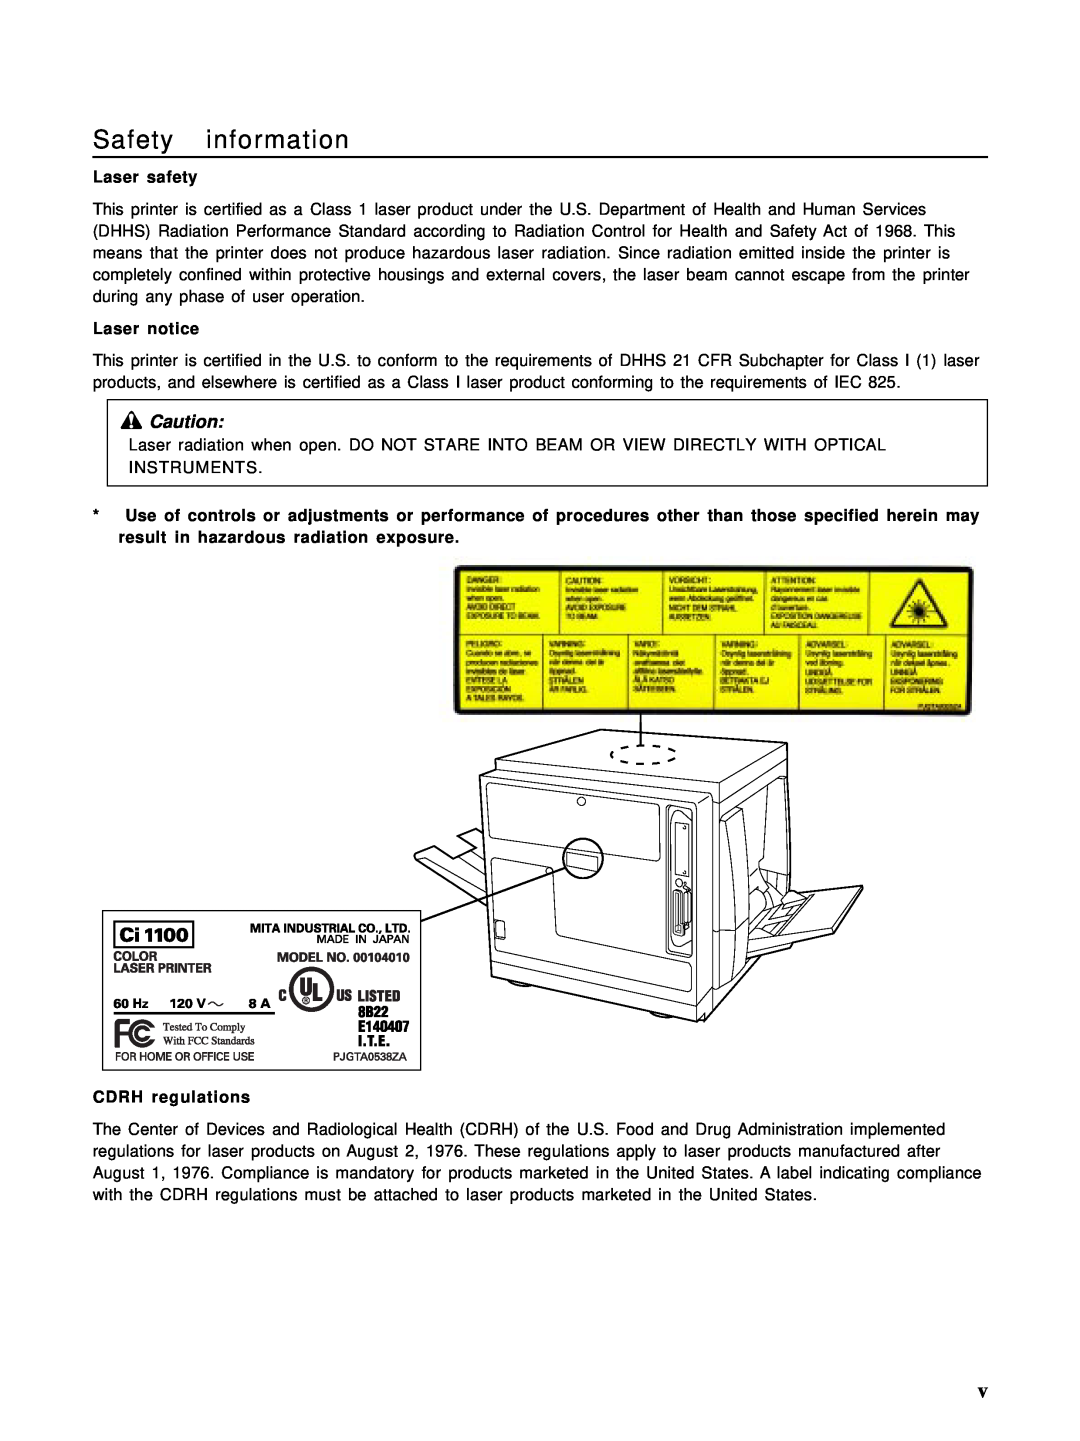 HP Ci 1100 manual Safety information, Laser safety, Laser notice, CDRH regulations 